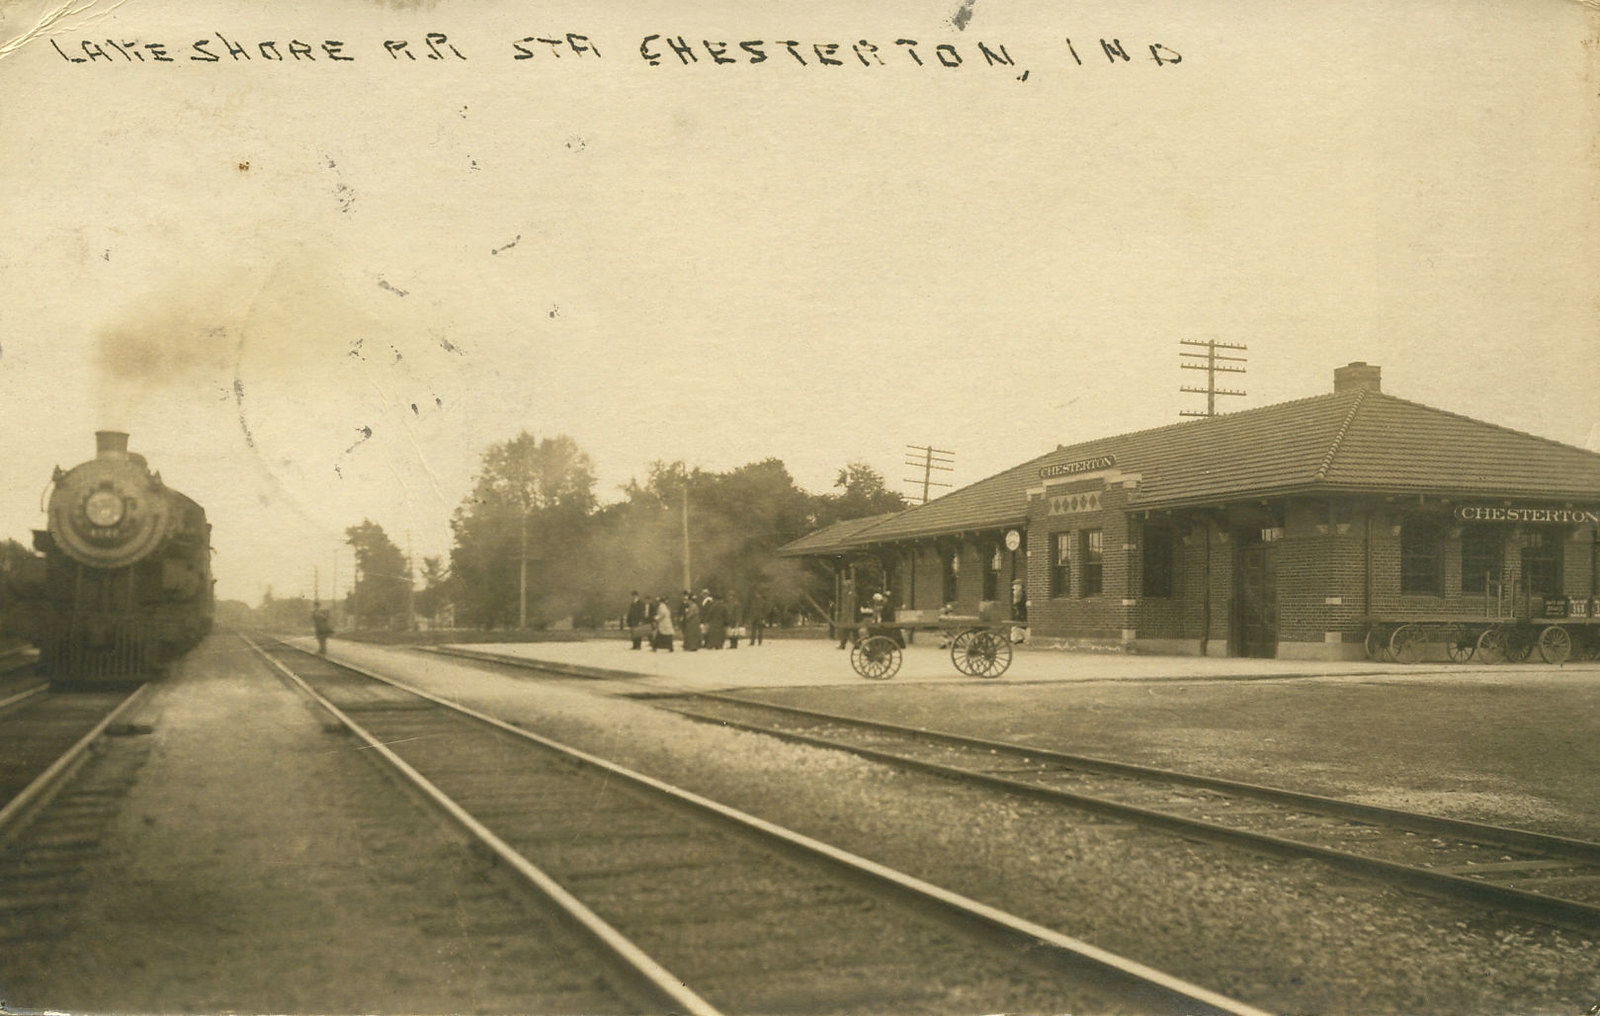 Lake Shore Railroad Station, 1915 - Chesterton, Indiana